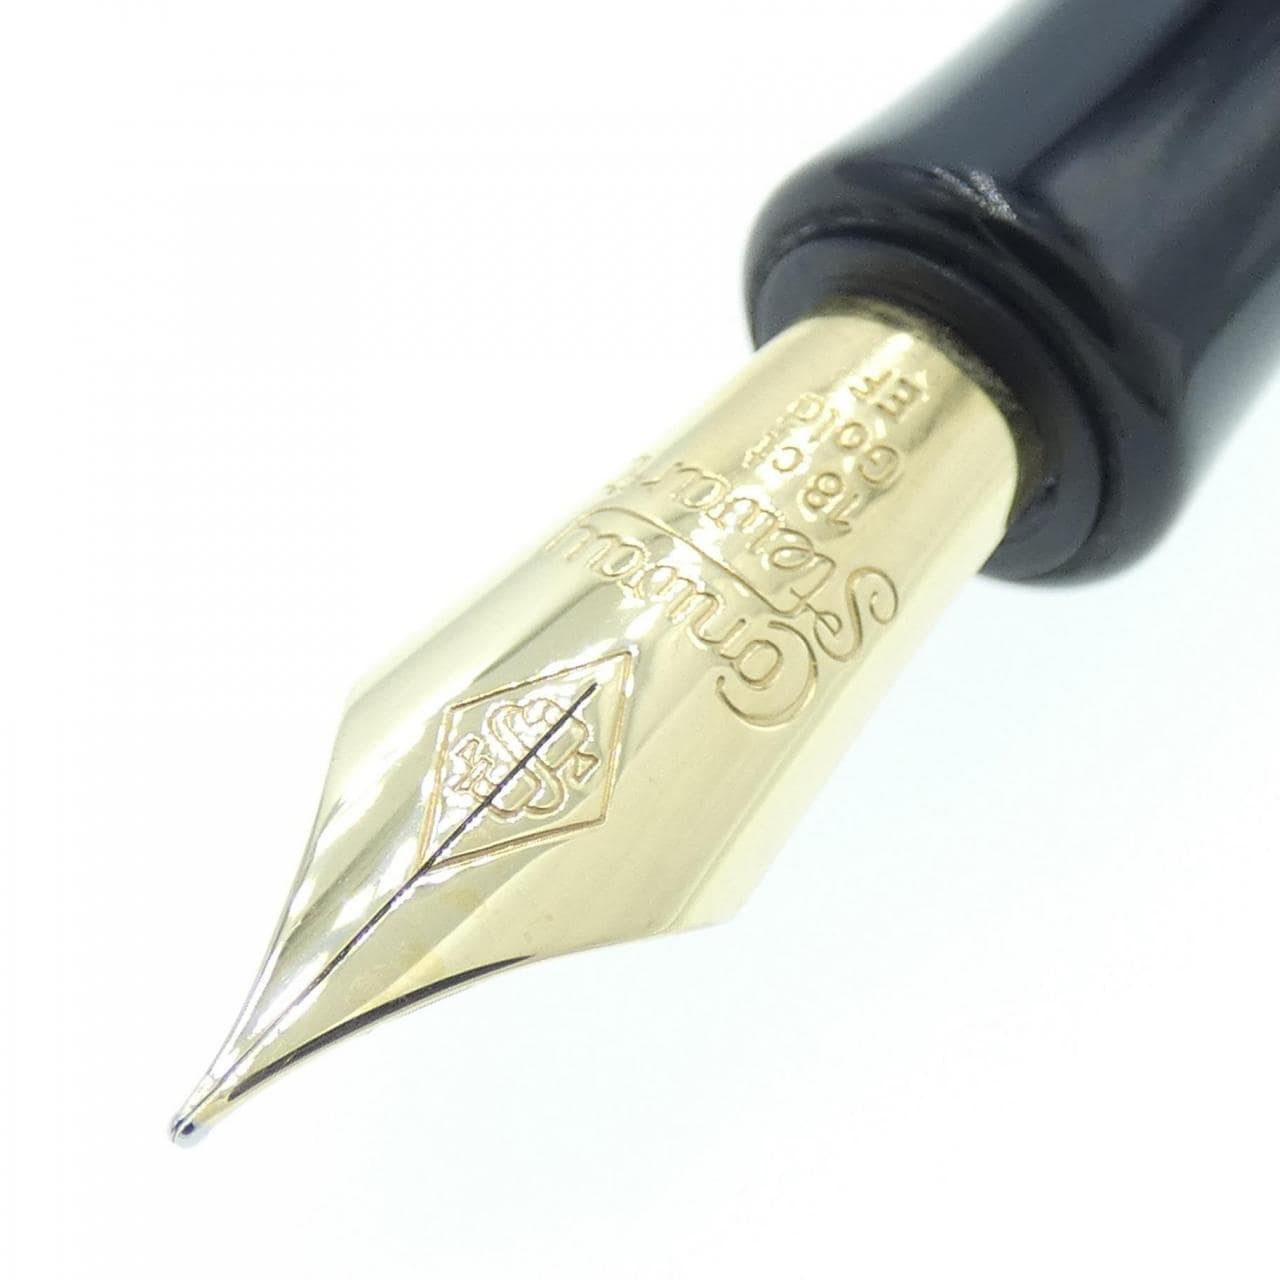 Conway Stewart惠灵顿系列黑金钢笔